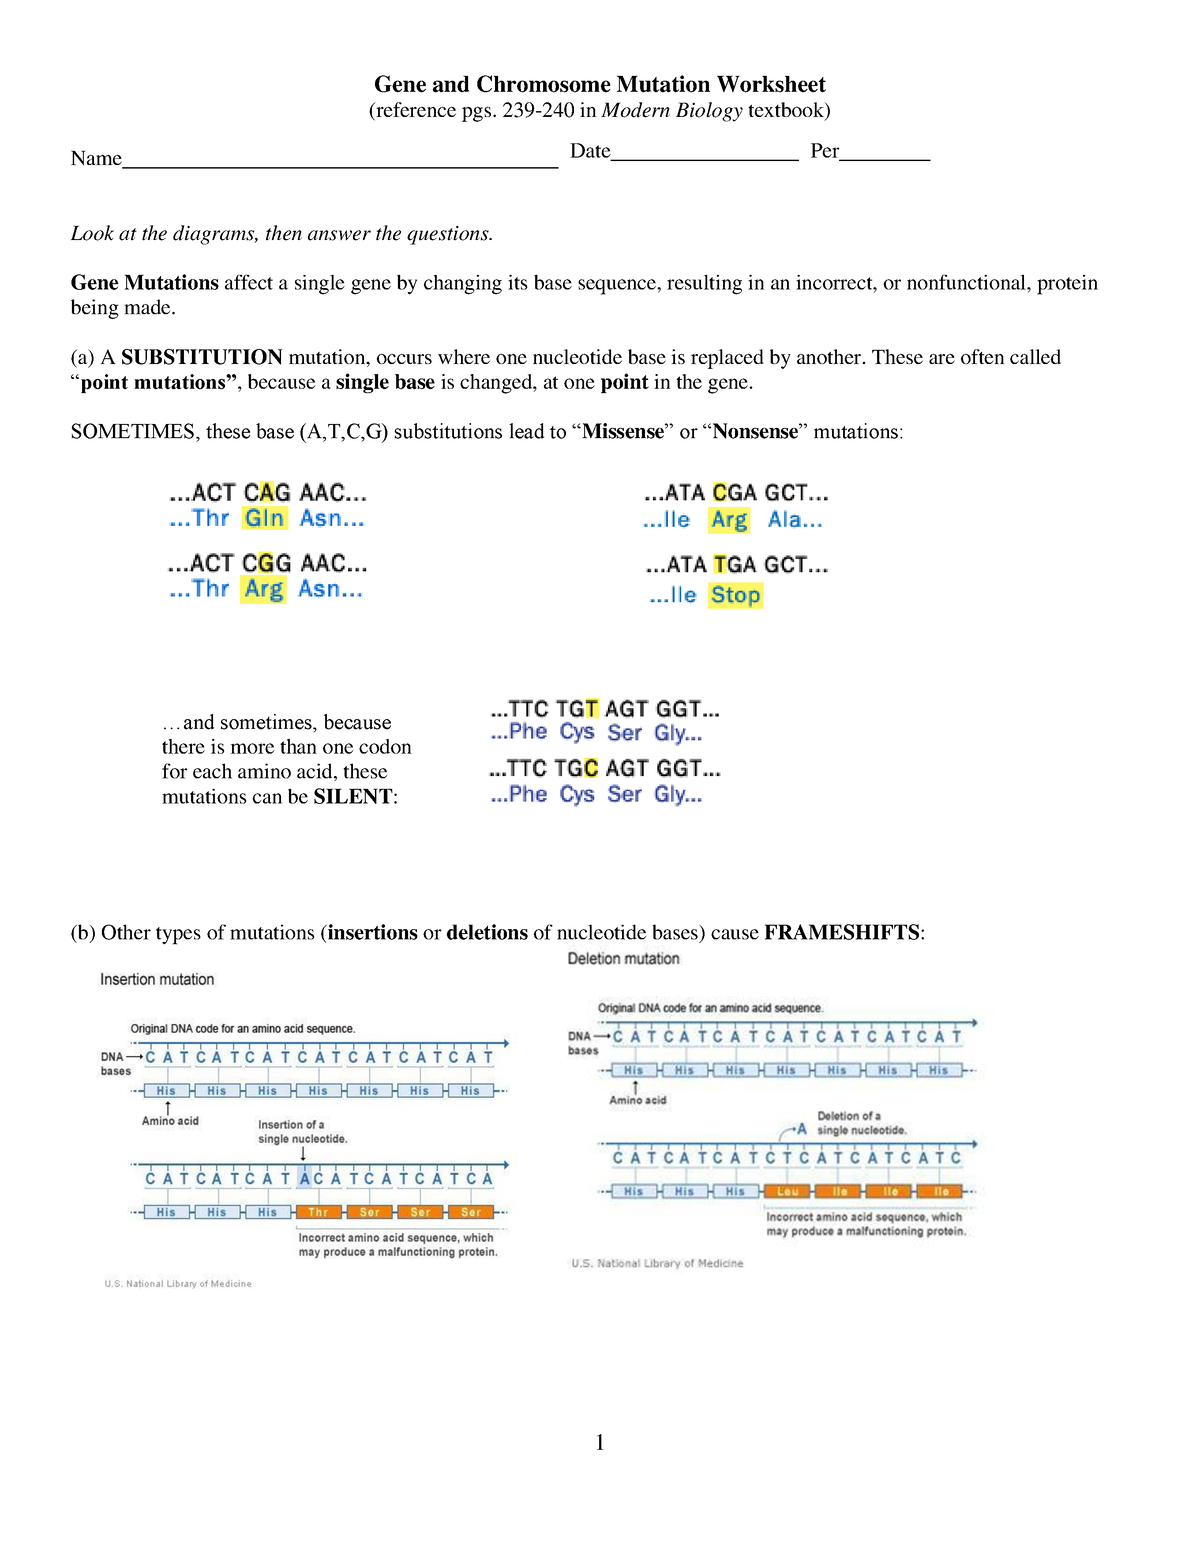 kami-export-natalee-klinock-gene-and-chromosome-mutation-worksheet